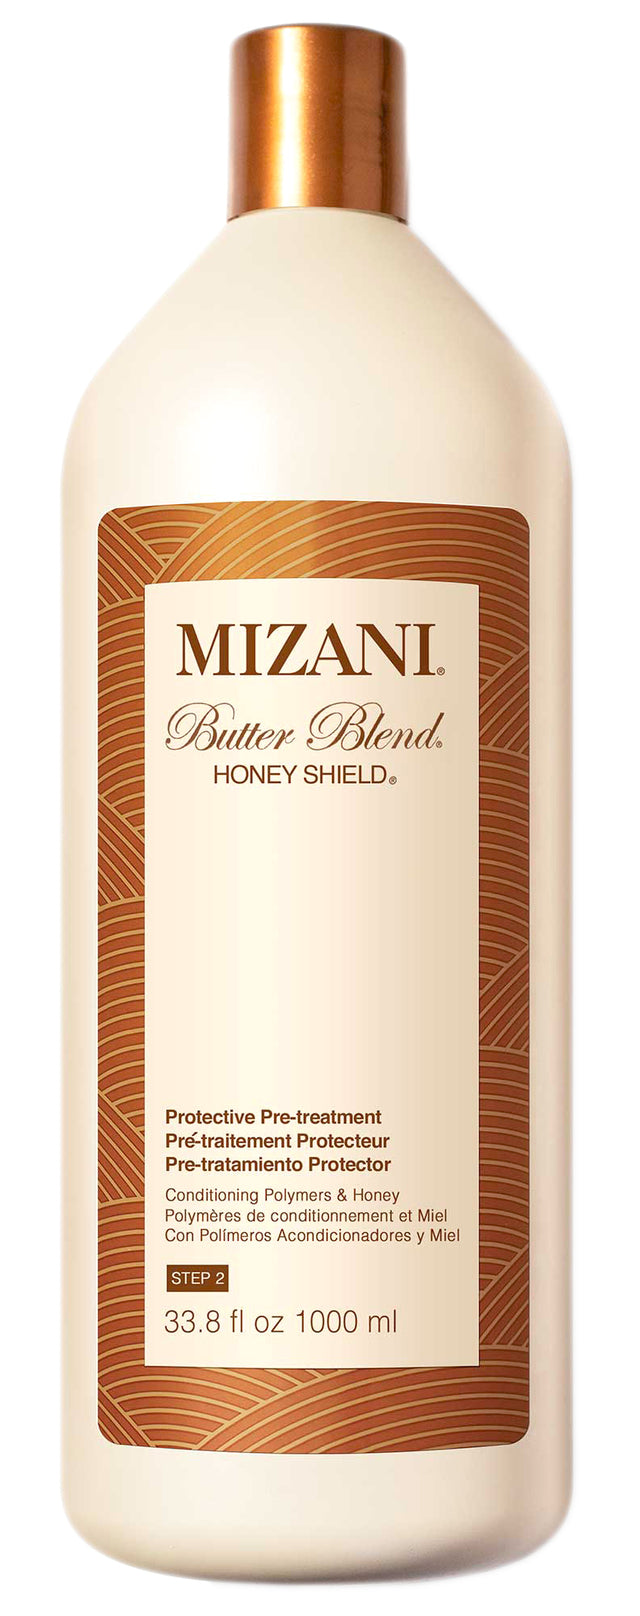 Mizani Butter Blend Honey Shield - Protective Pre-Treatment 33.8 oz.